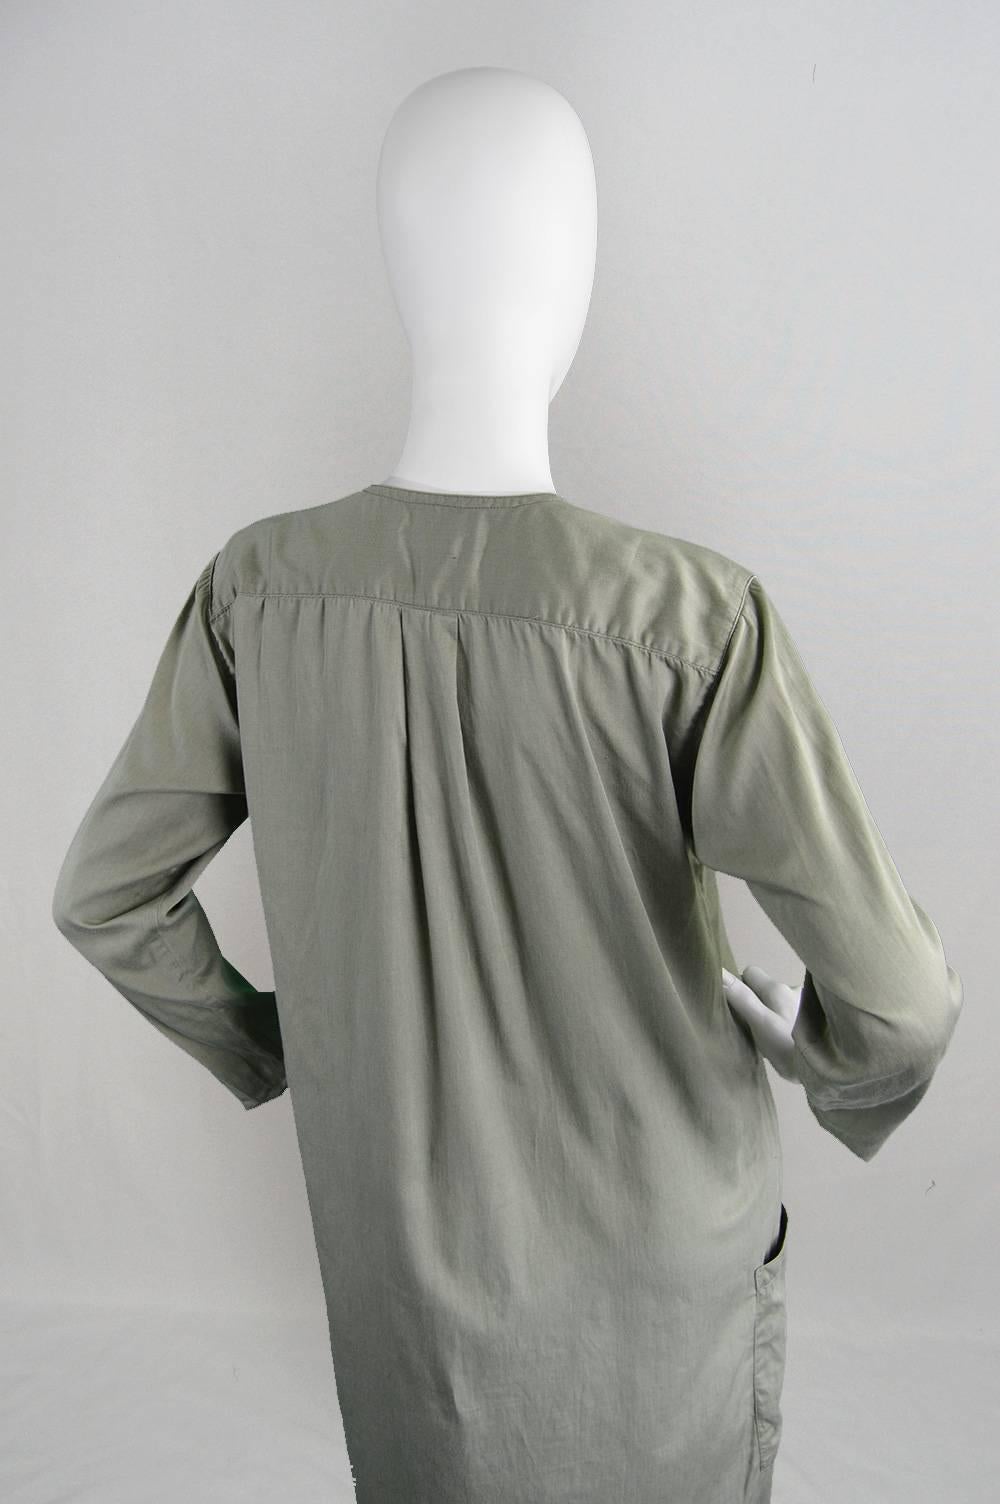 Kenzo Jap 1970s Vintage Minimalist Cotton Shift Dress with Oversized Pockets 3